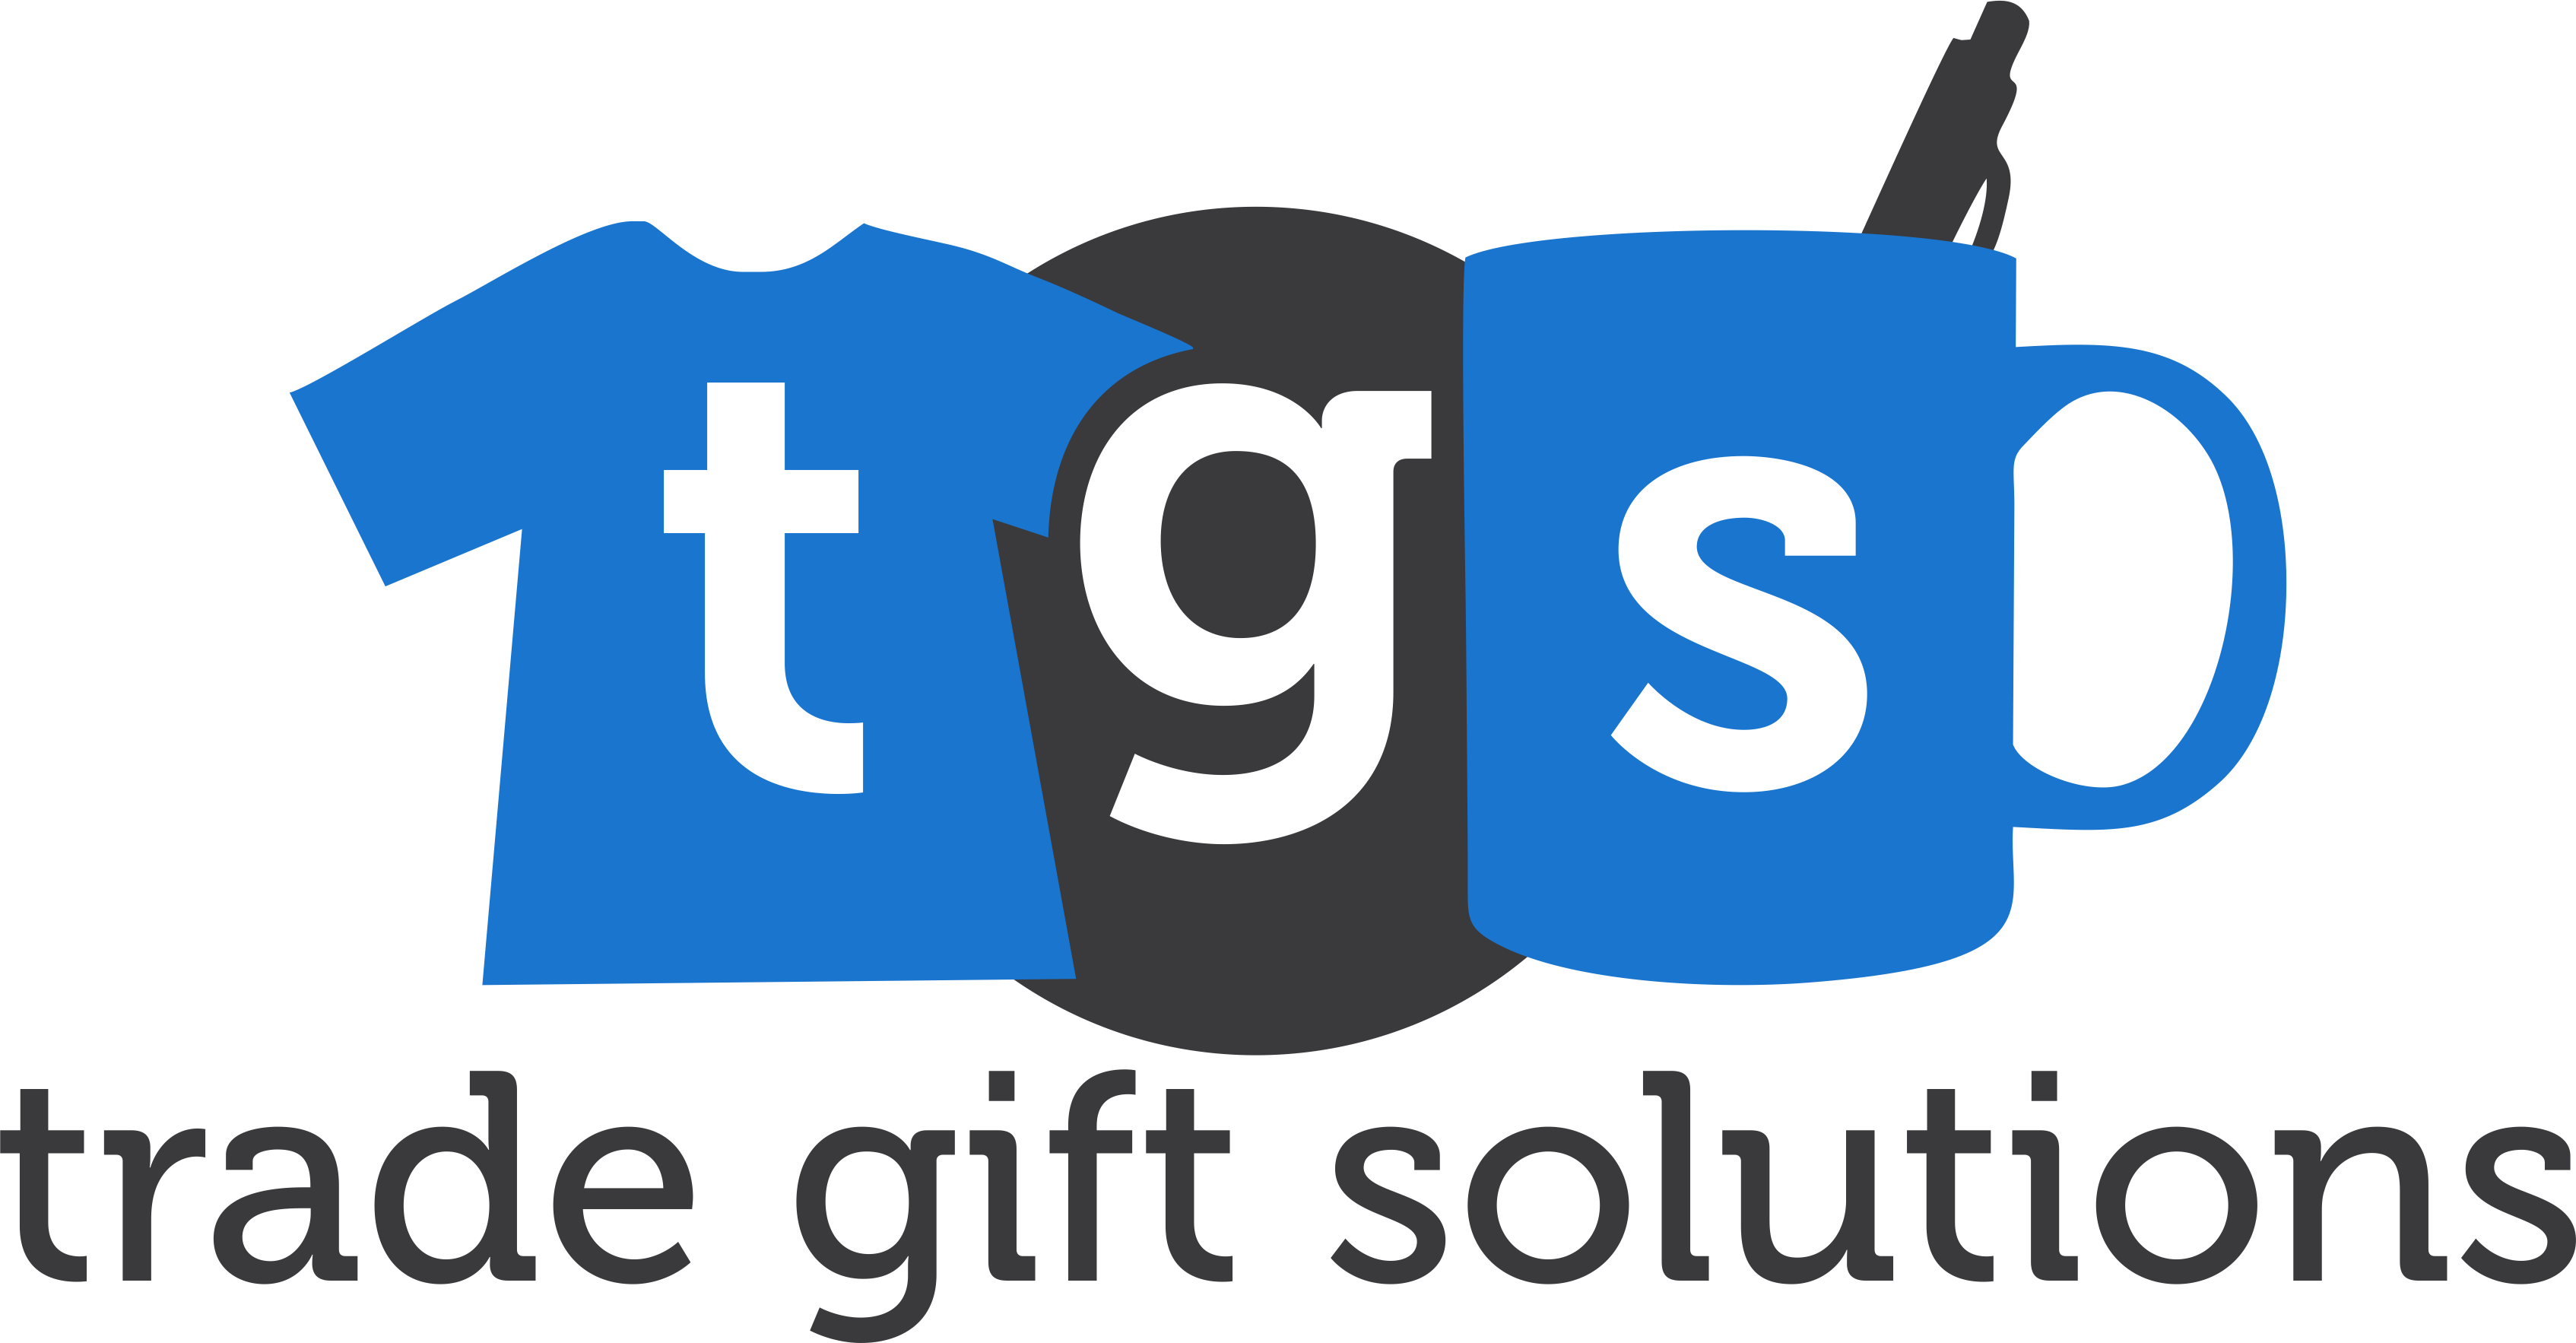 trade gift solutions logo